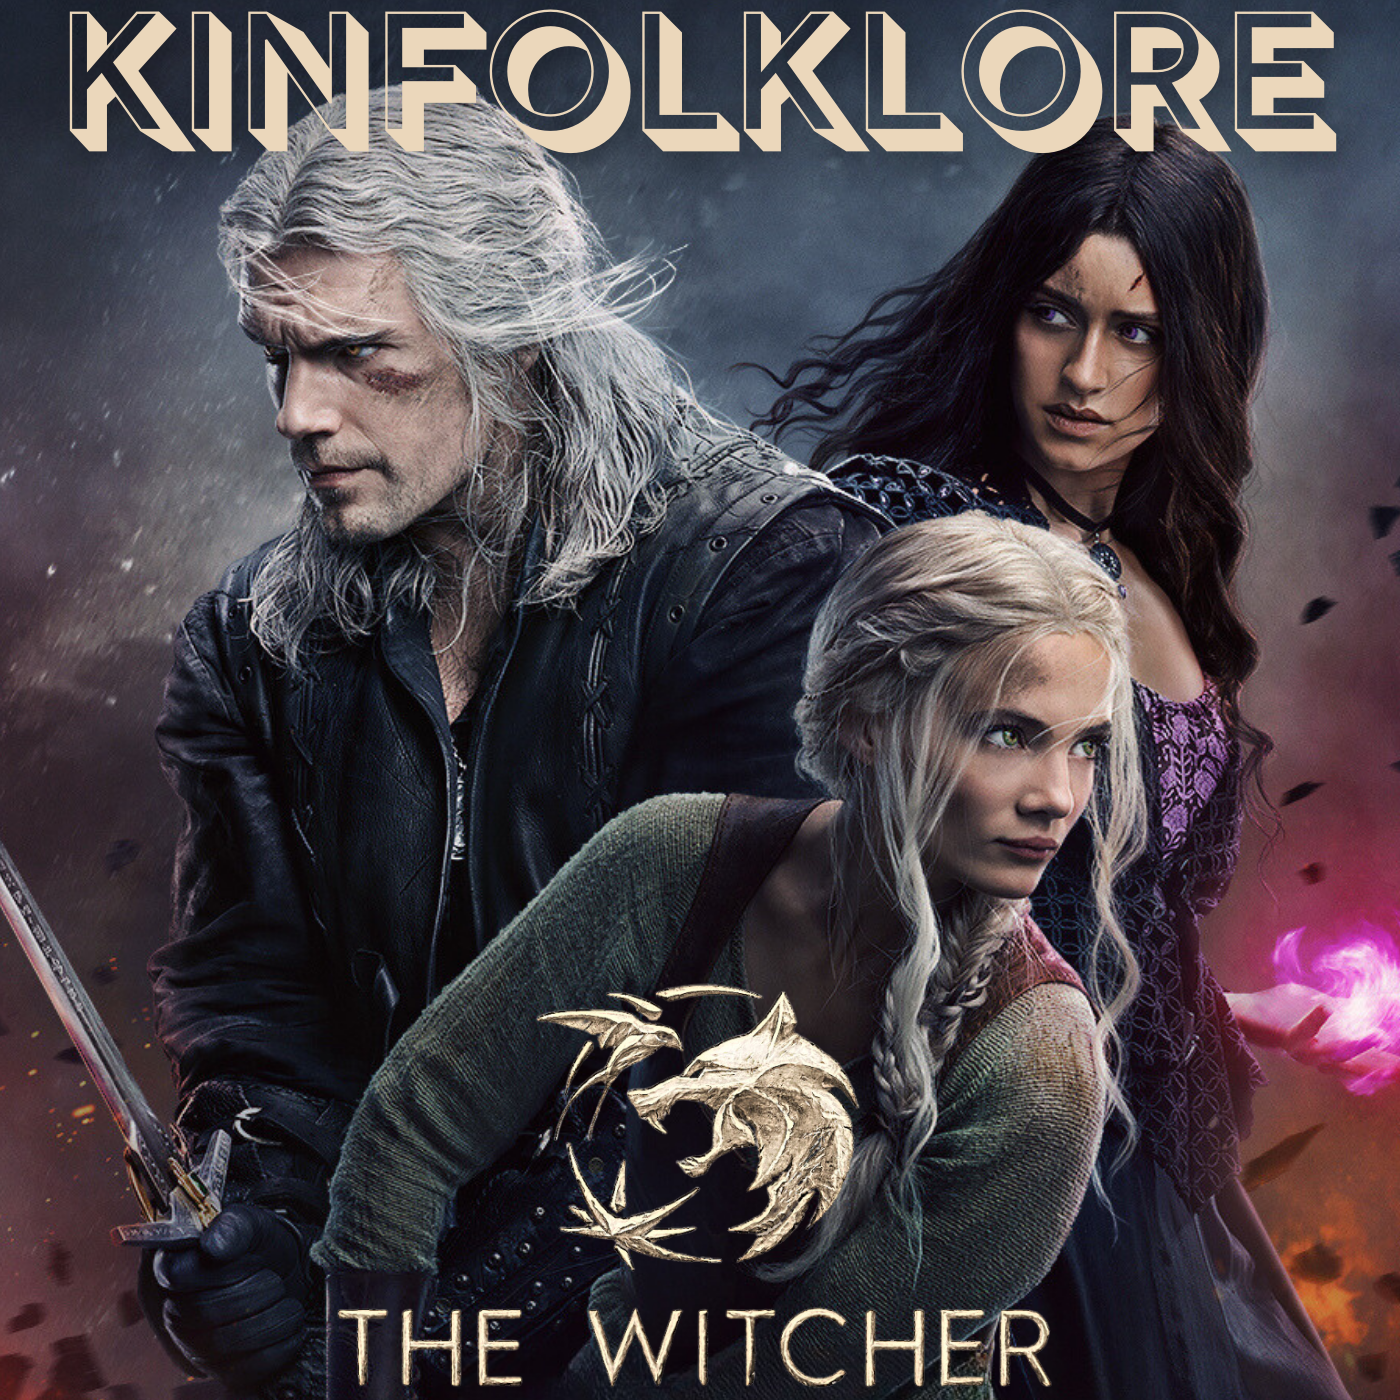 S11 Ep4: Kinfolklore: Witcher Season 3 (Episode 6)